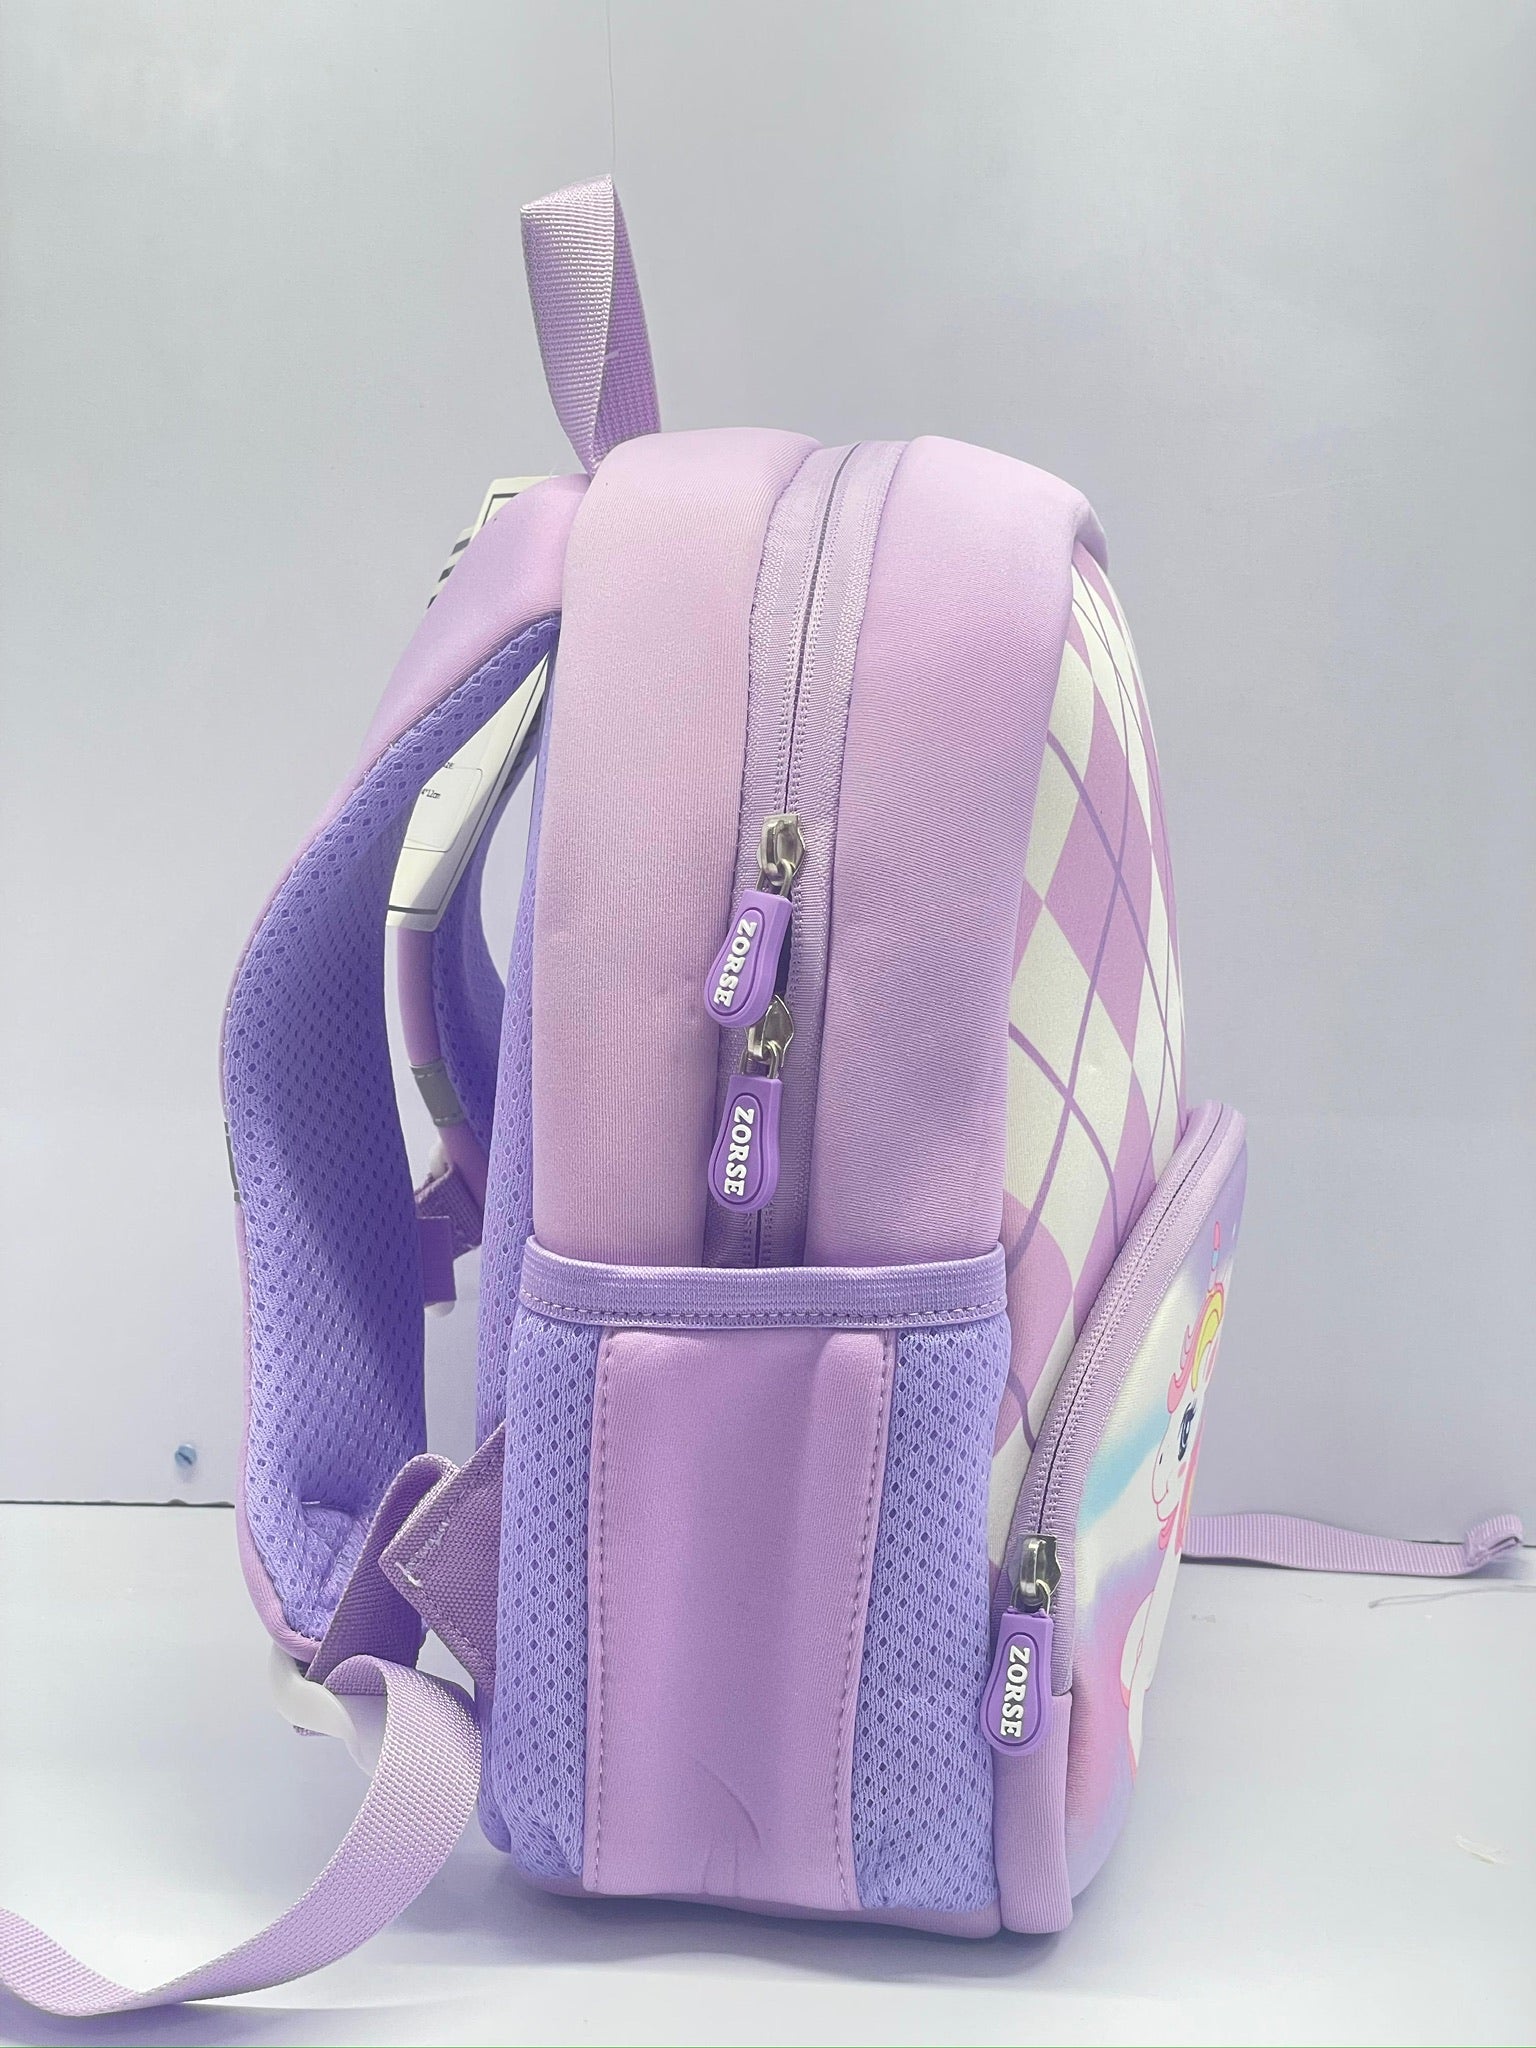 ZORSE unicorn school backpacks! Take your kiddo to a magical world!